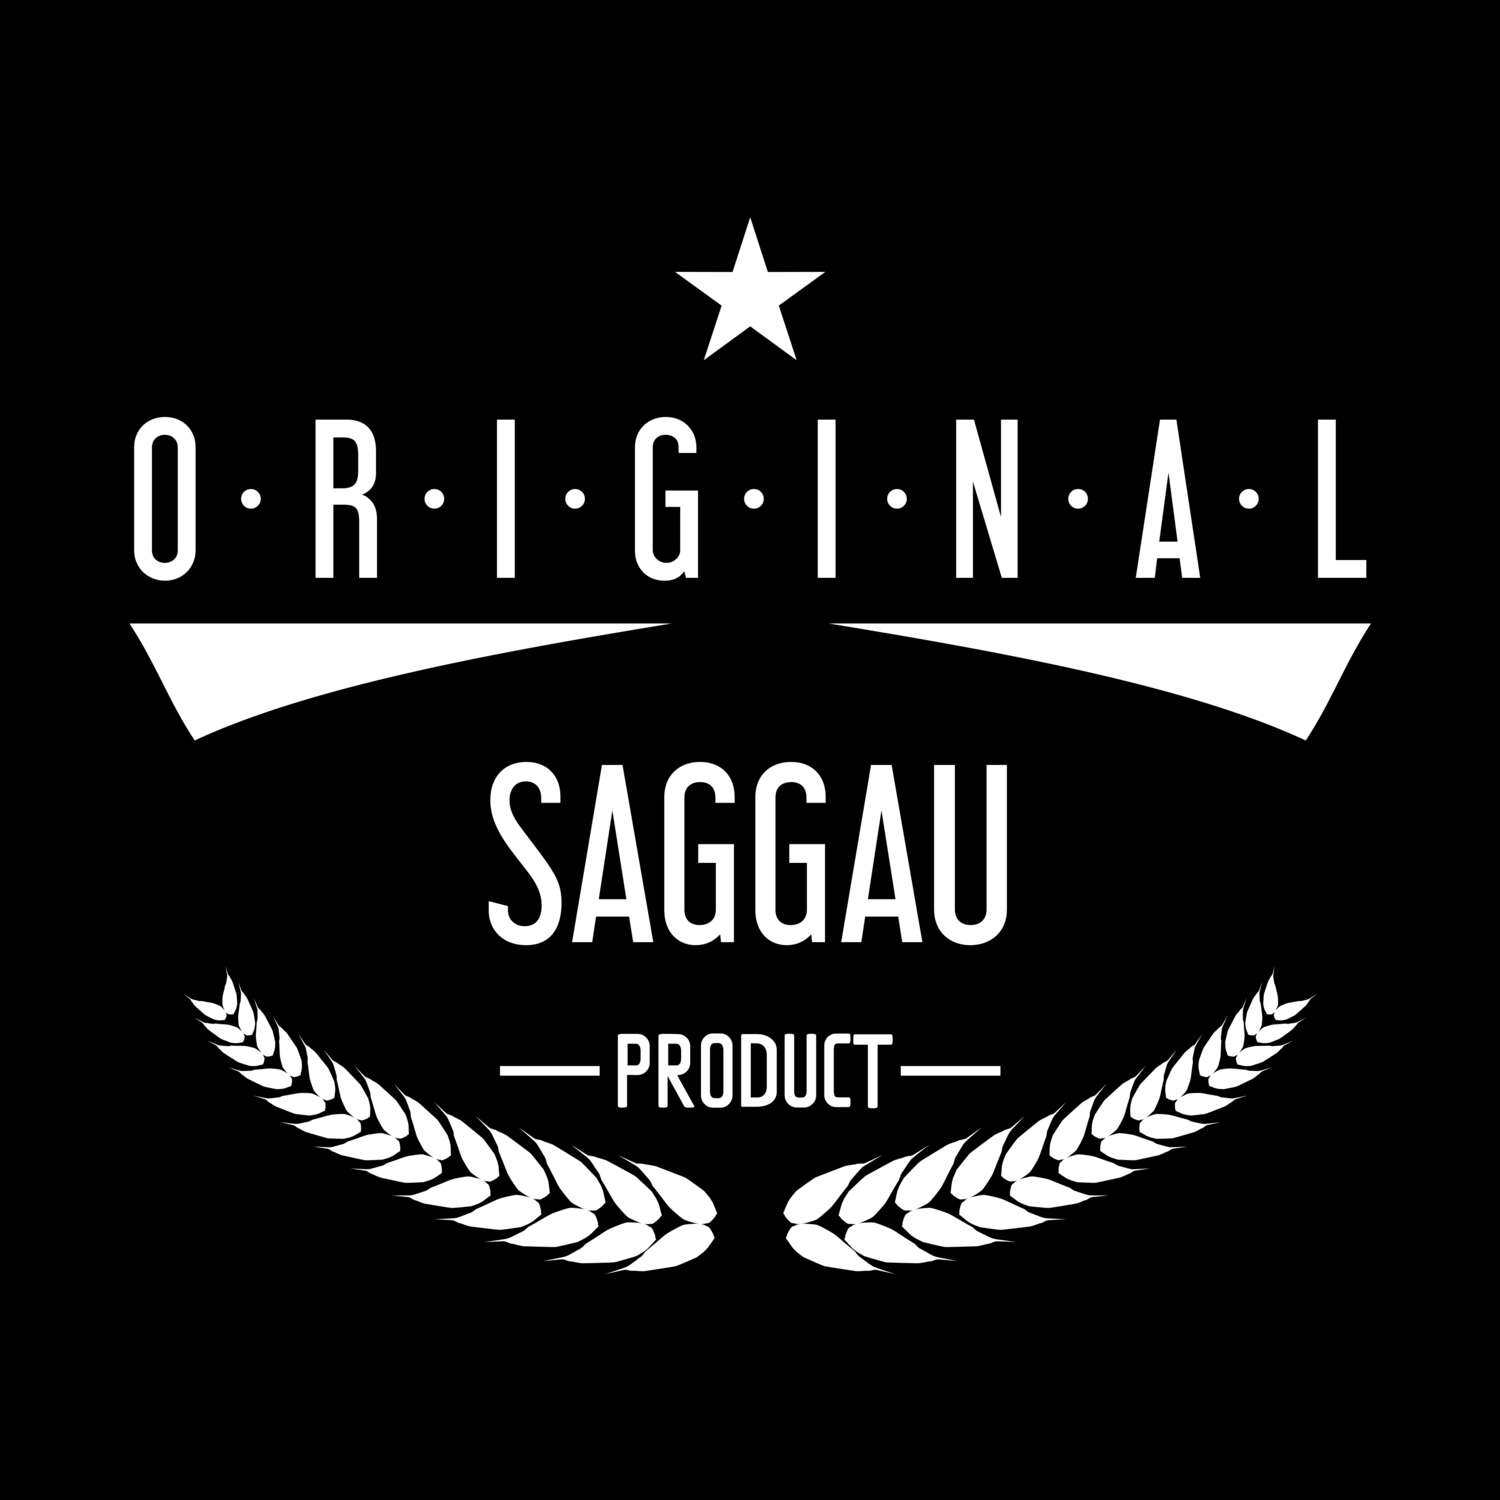 Saggau T-Shirt »Original Product«